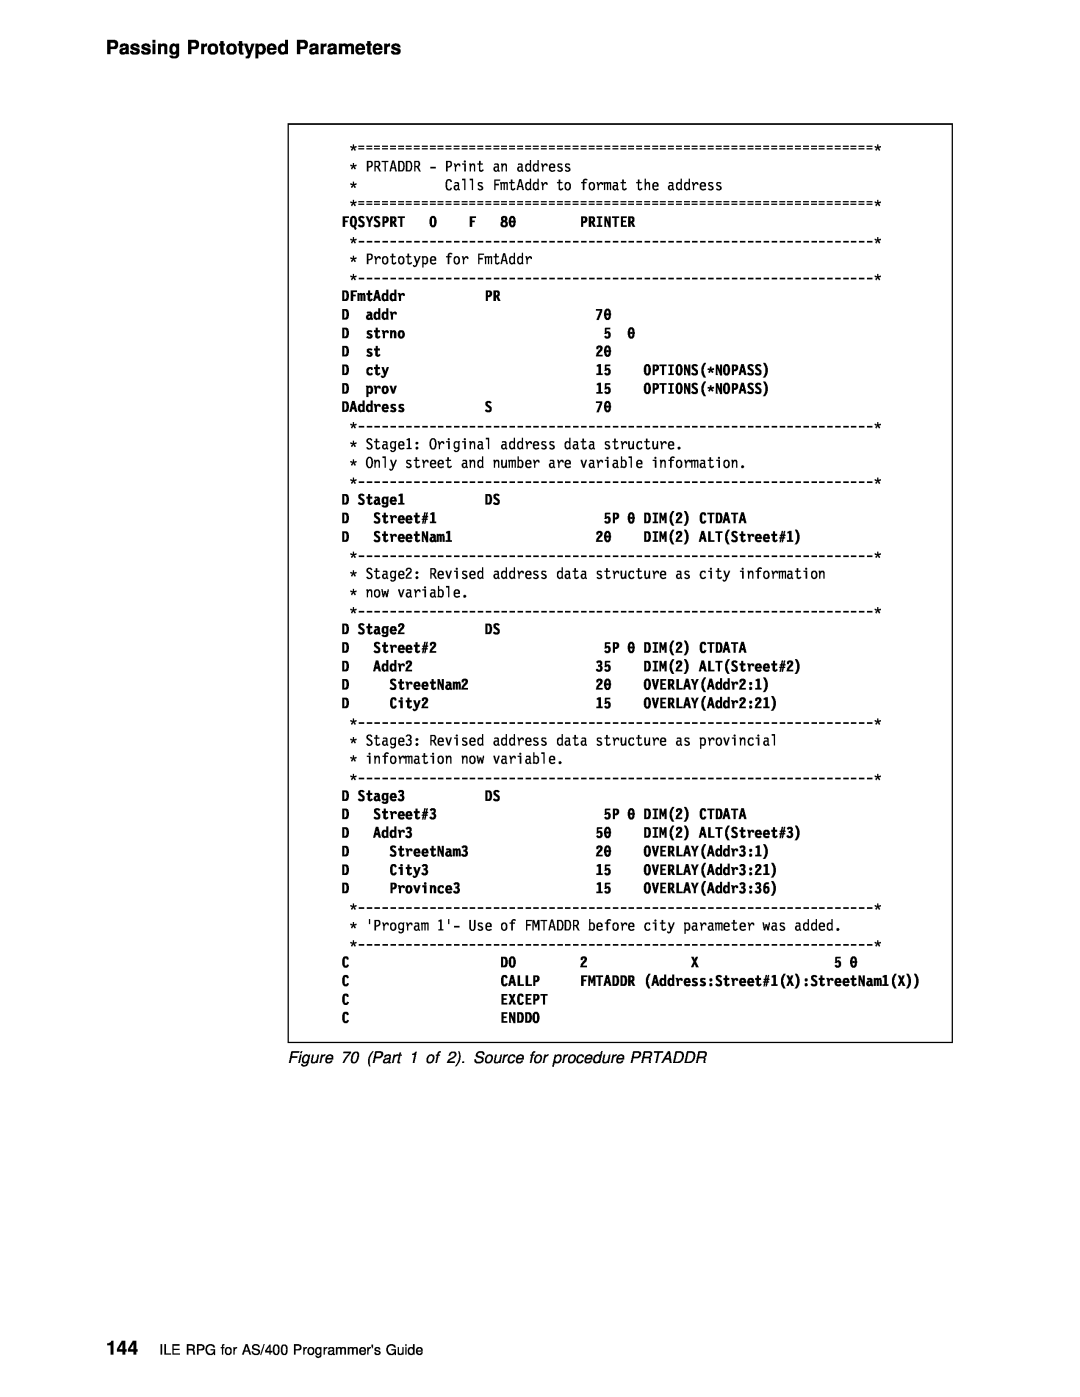 IBM AS/400 manual Passing Prototyped Parameters, Part, Source for procedure PRTADDR, DIM2 CTDATA, Fmtaddr 